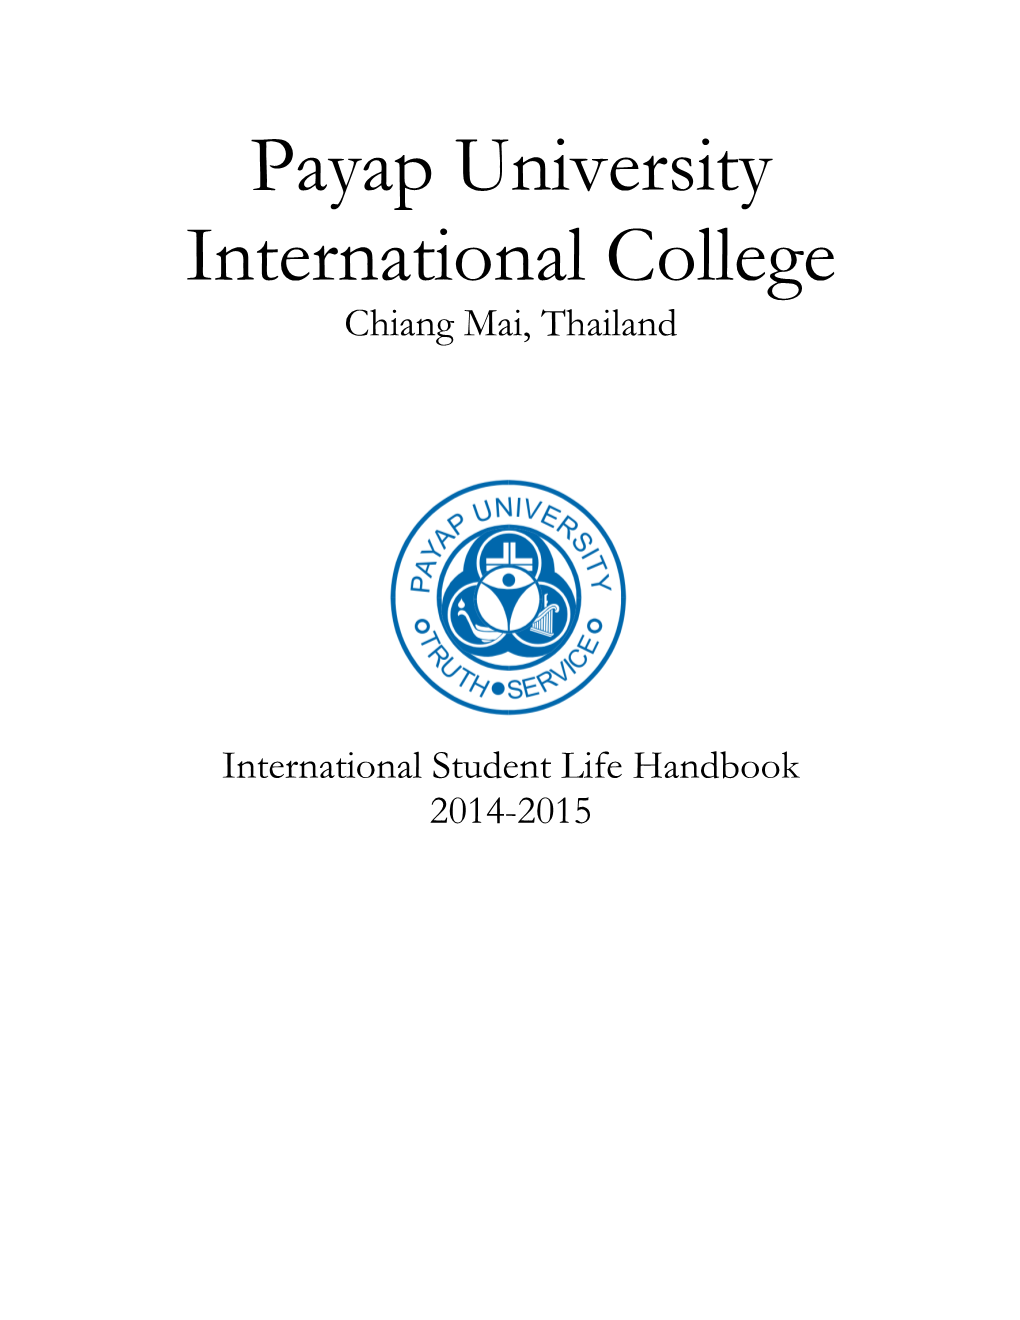 Payap University International College Chiang Mai, Thailand